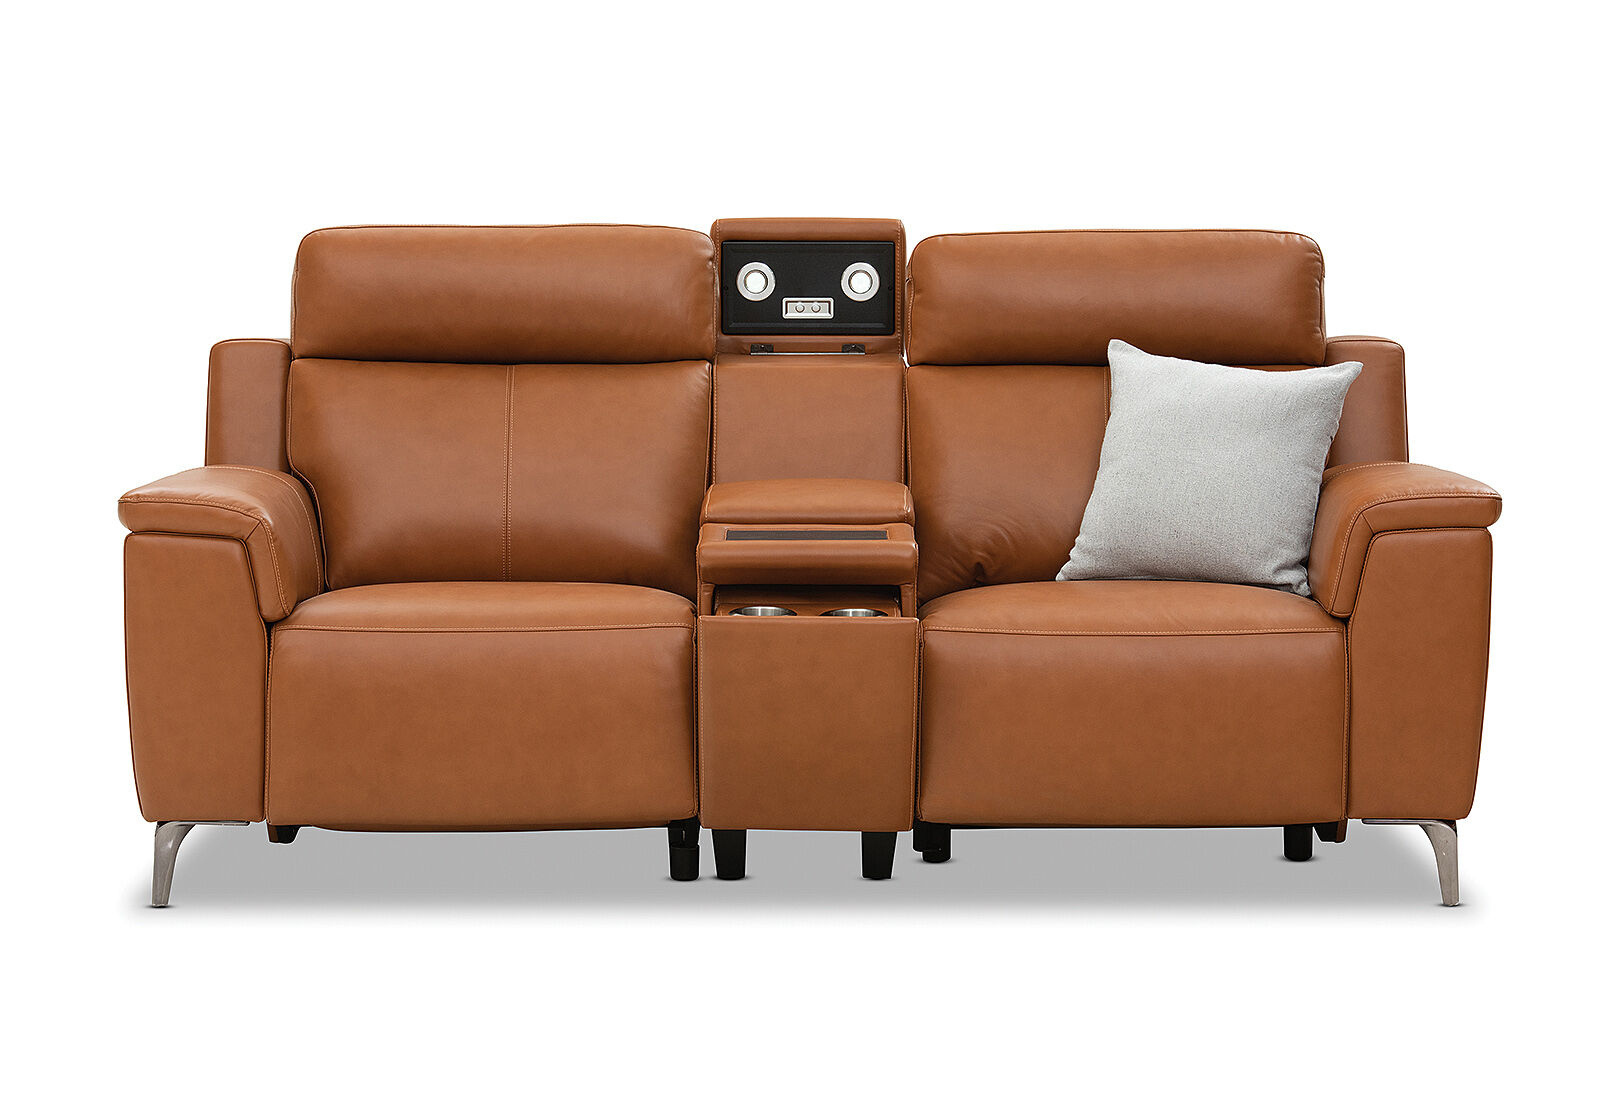 Aristotle Leather 2 Seater Sofa, Light Grey Leather Electric Recliner Sofa Set